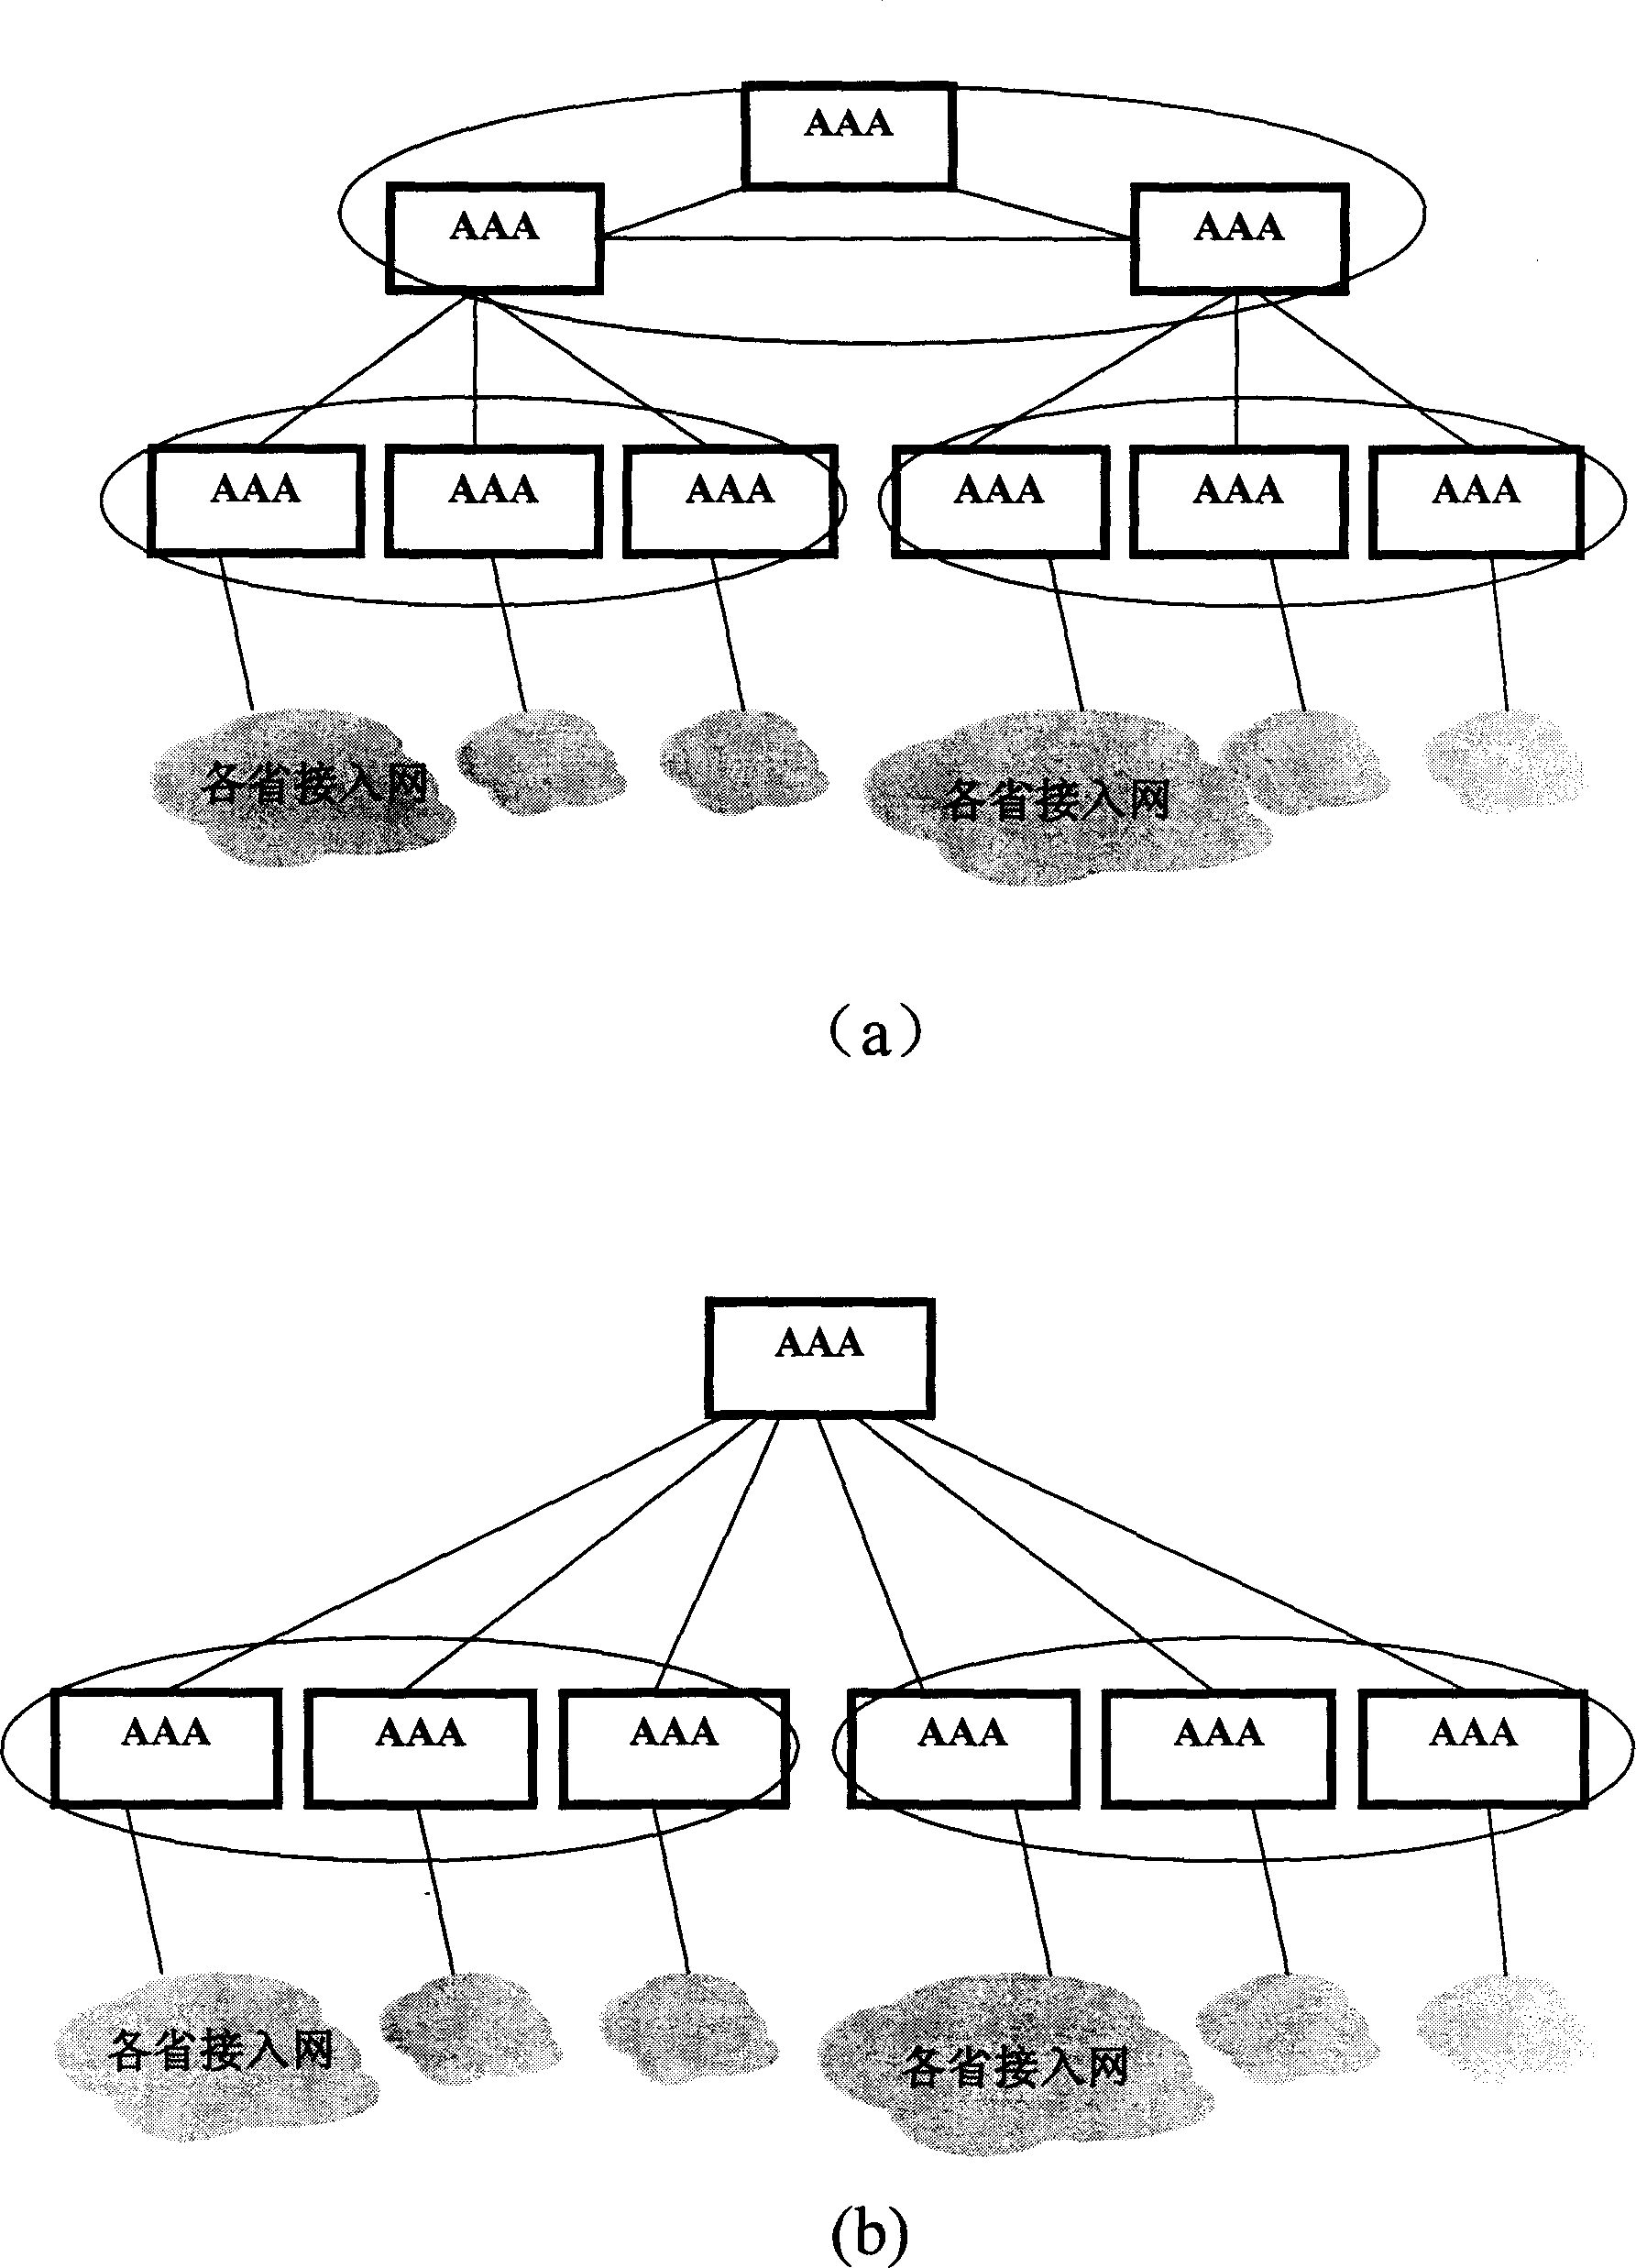 Method and system for providing user network roam